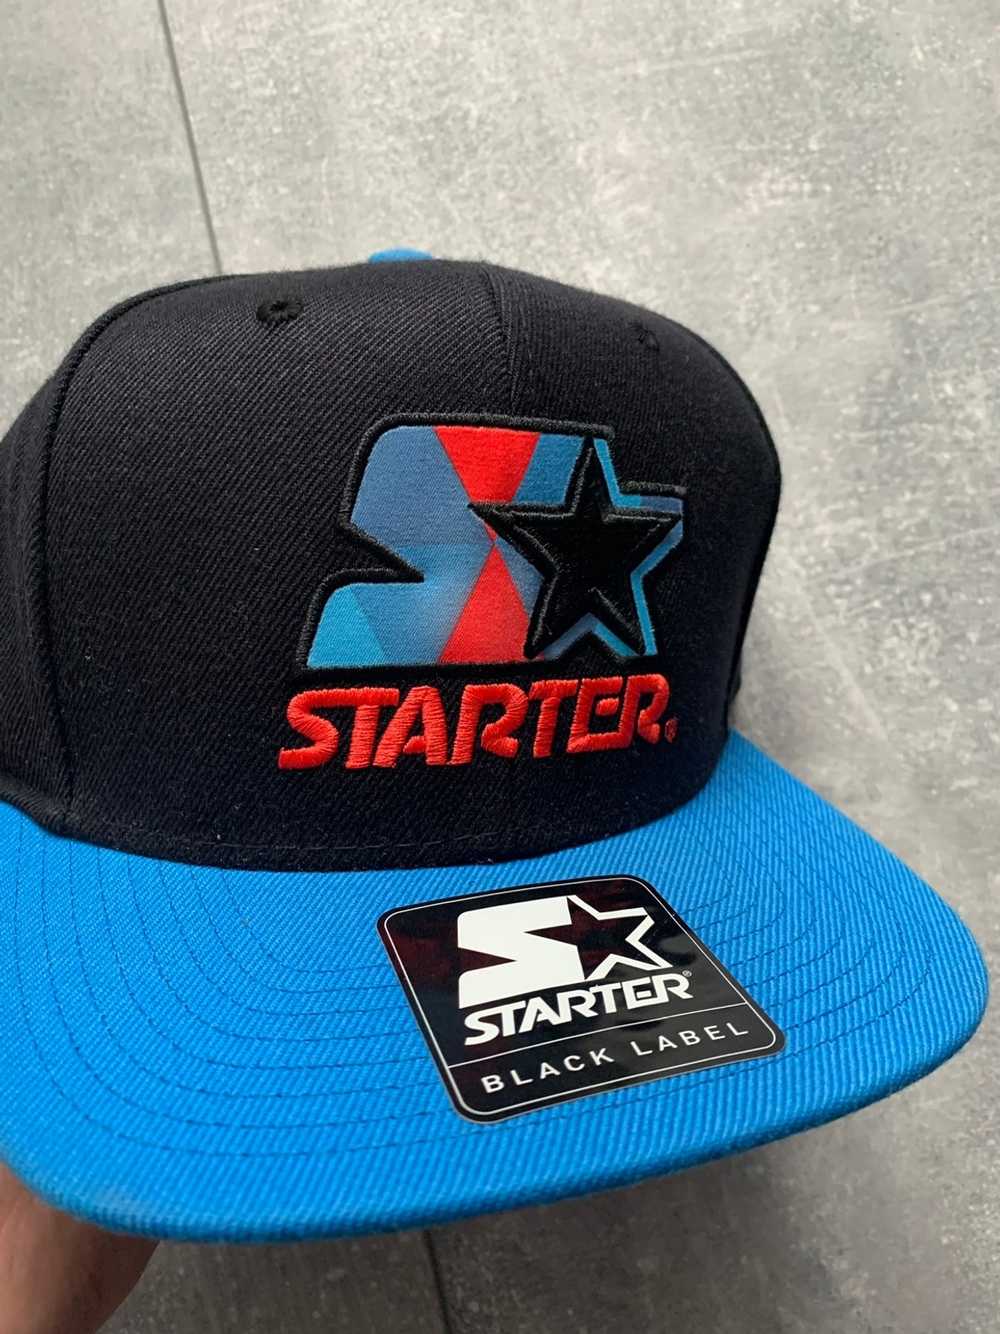 Starter Starter Black label cap new - Gem